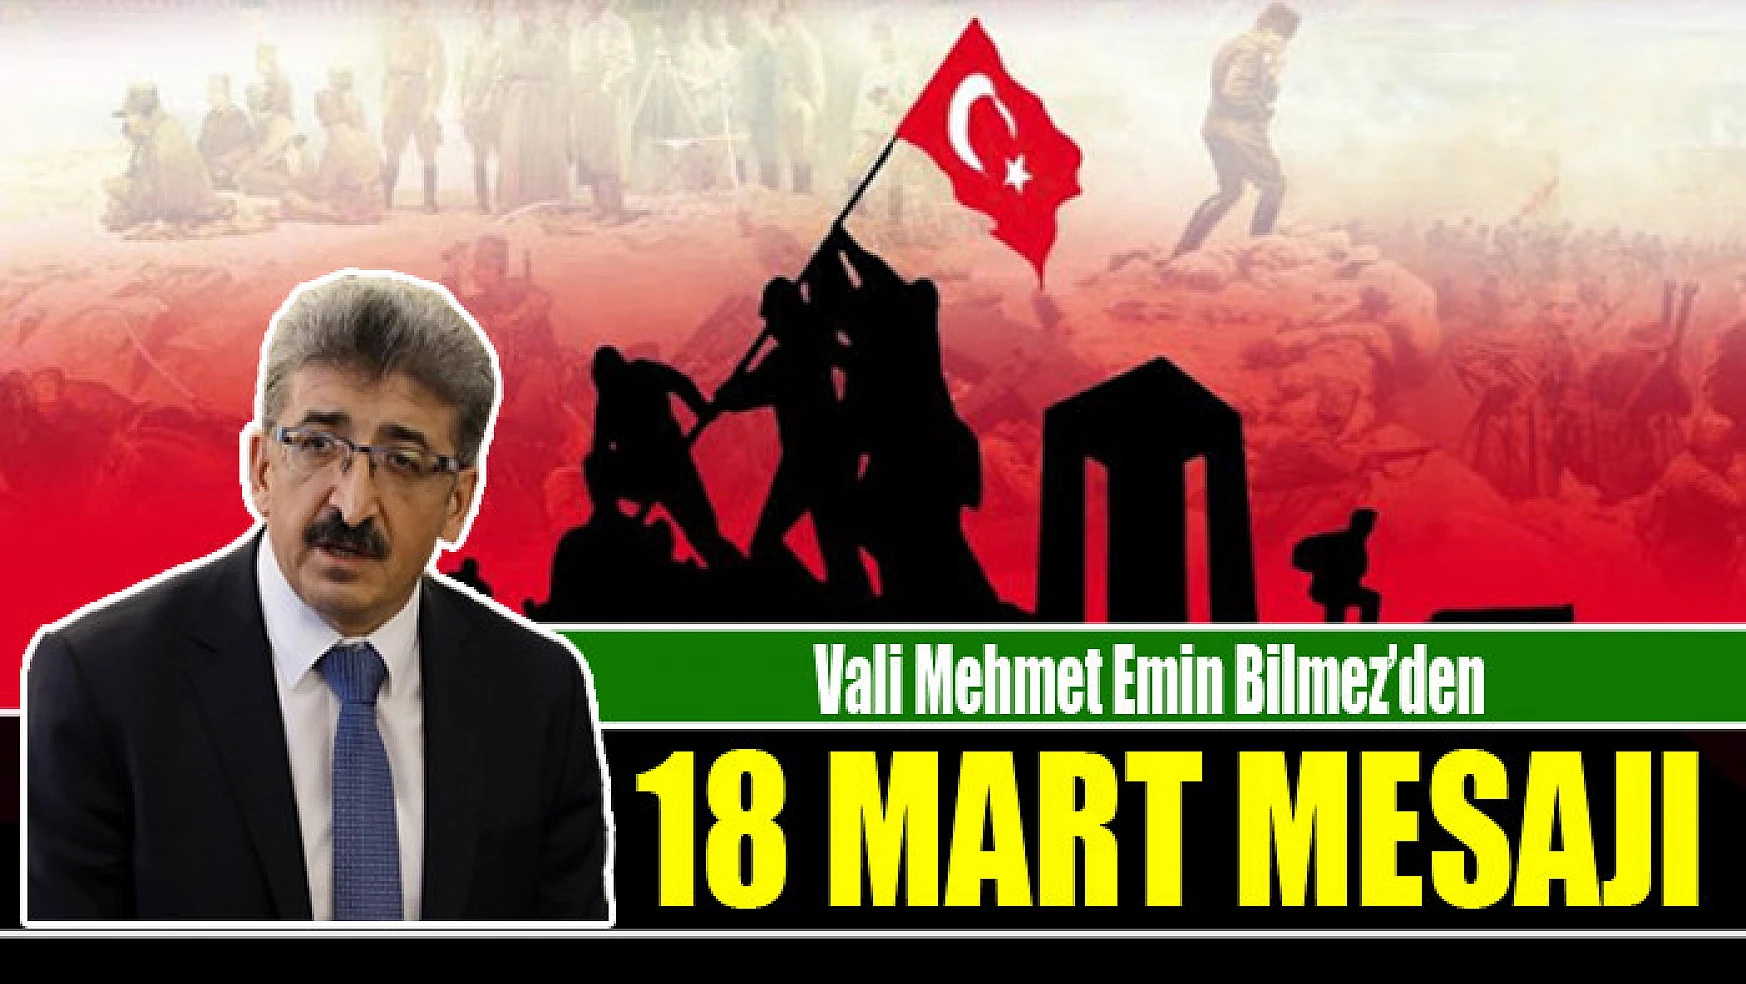 Vali Bilmez'den '18 Mart' mesajı